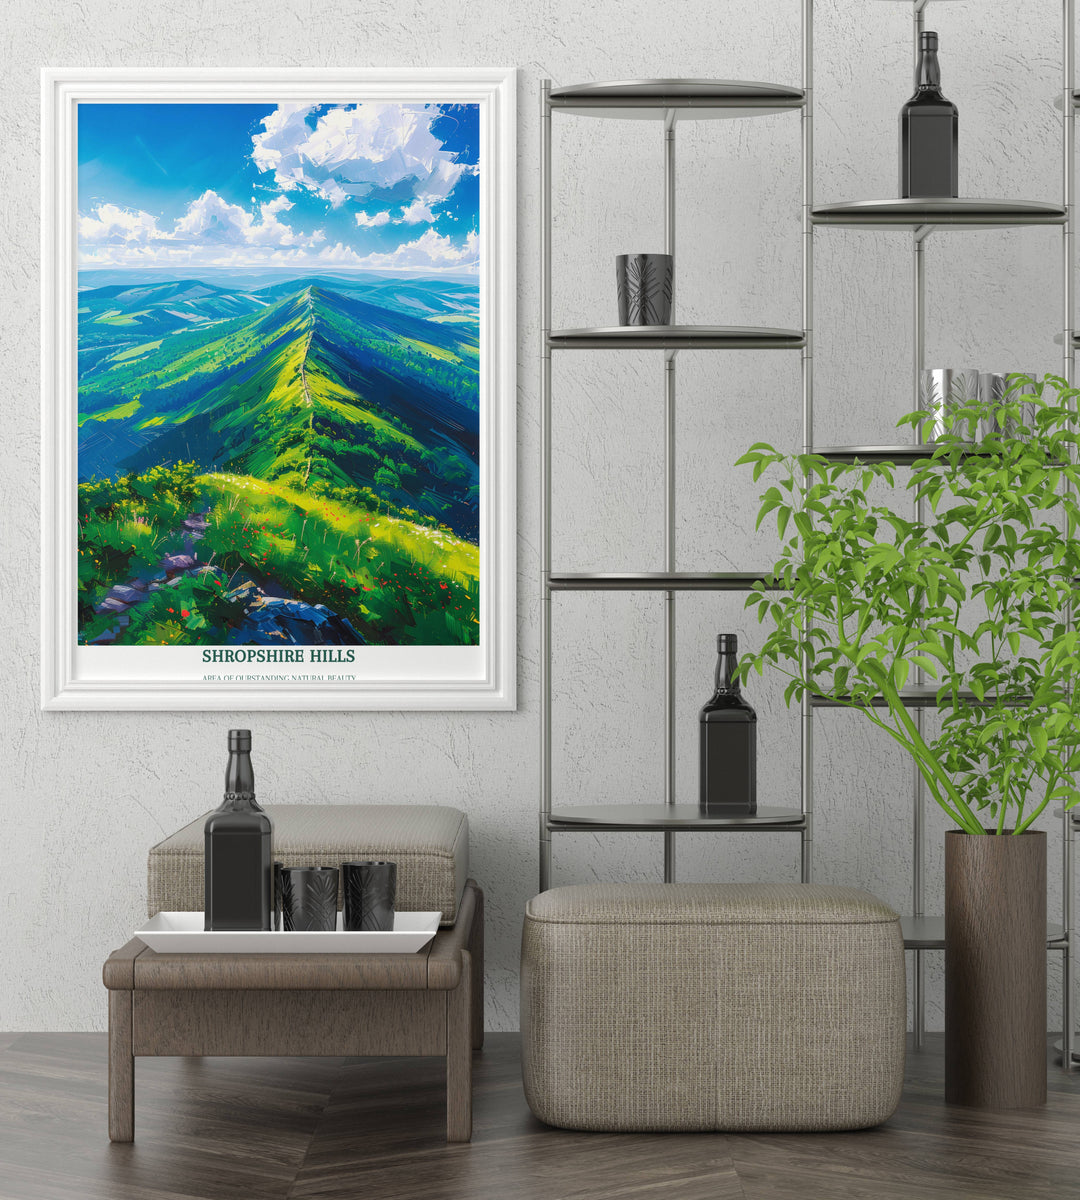 Shropshire Hills Travel Print Wall Art - The Long Mynd - Shropshire Hills Gift Art - Zone de beauté naturelle exceptionnelle